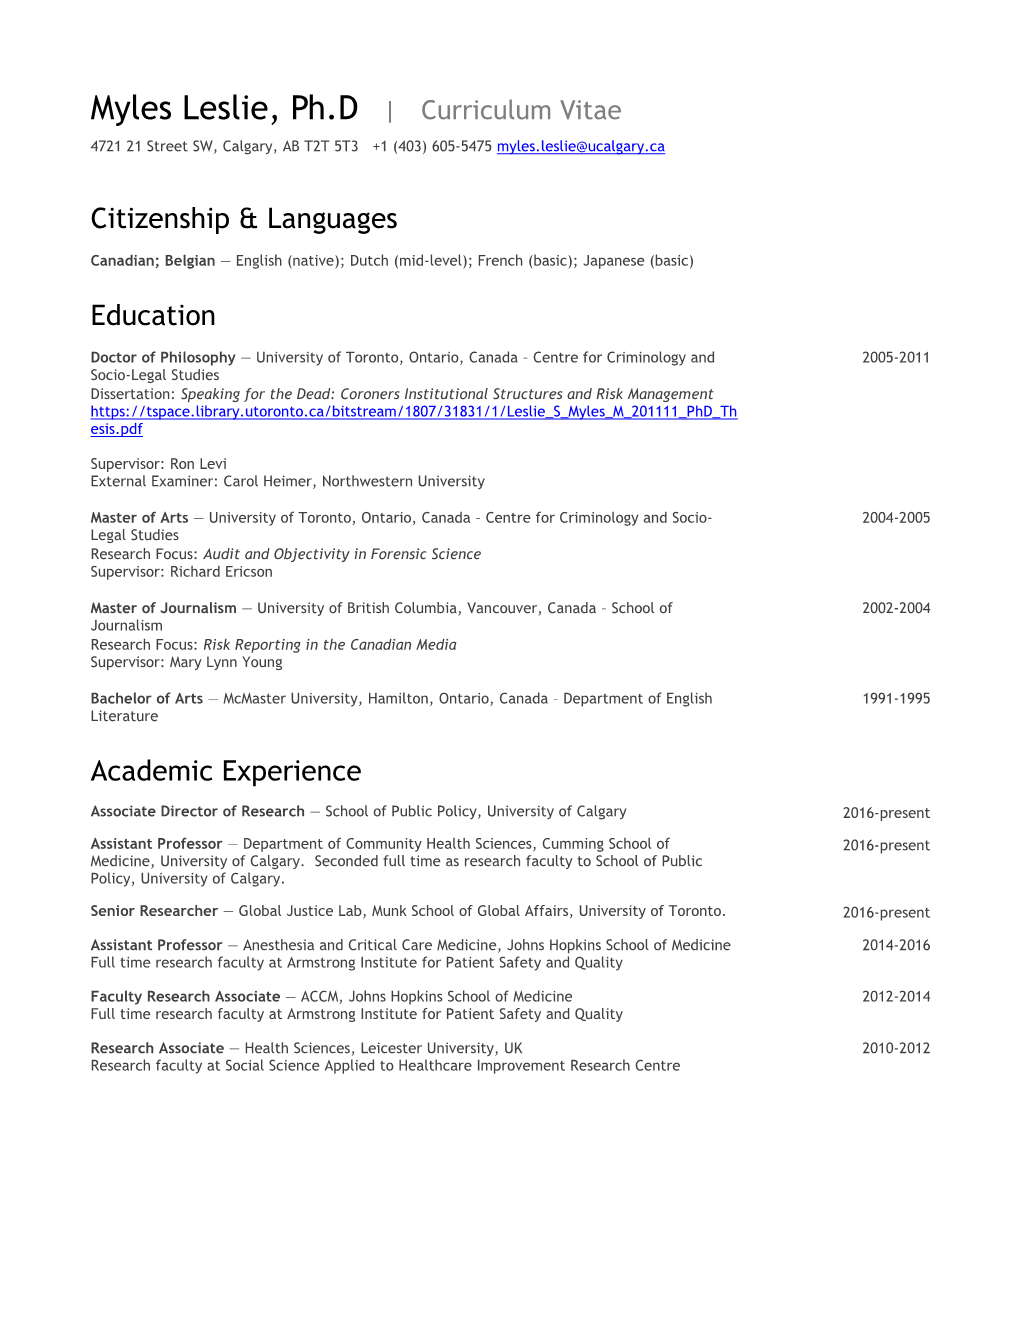 Citizenship & Languages Education Academic Experience